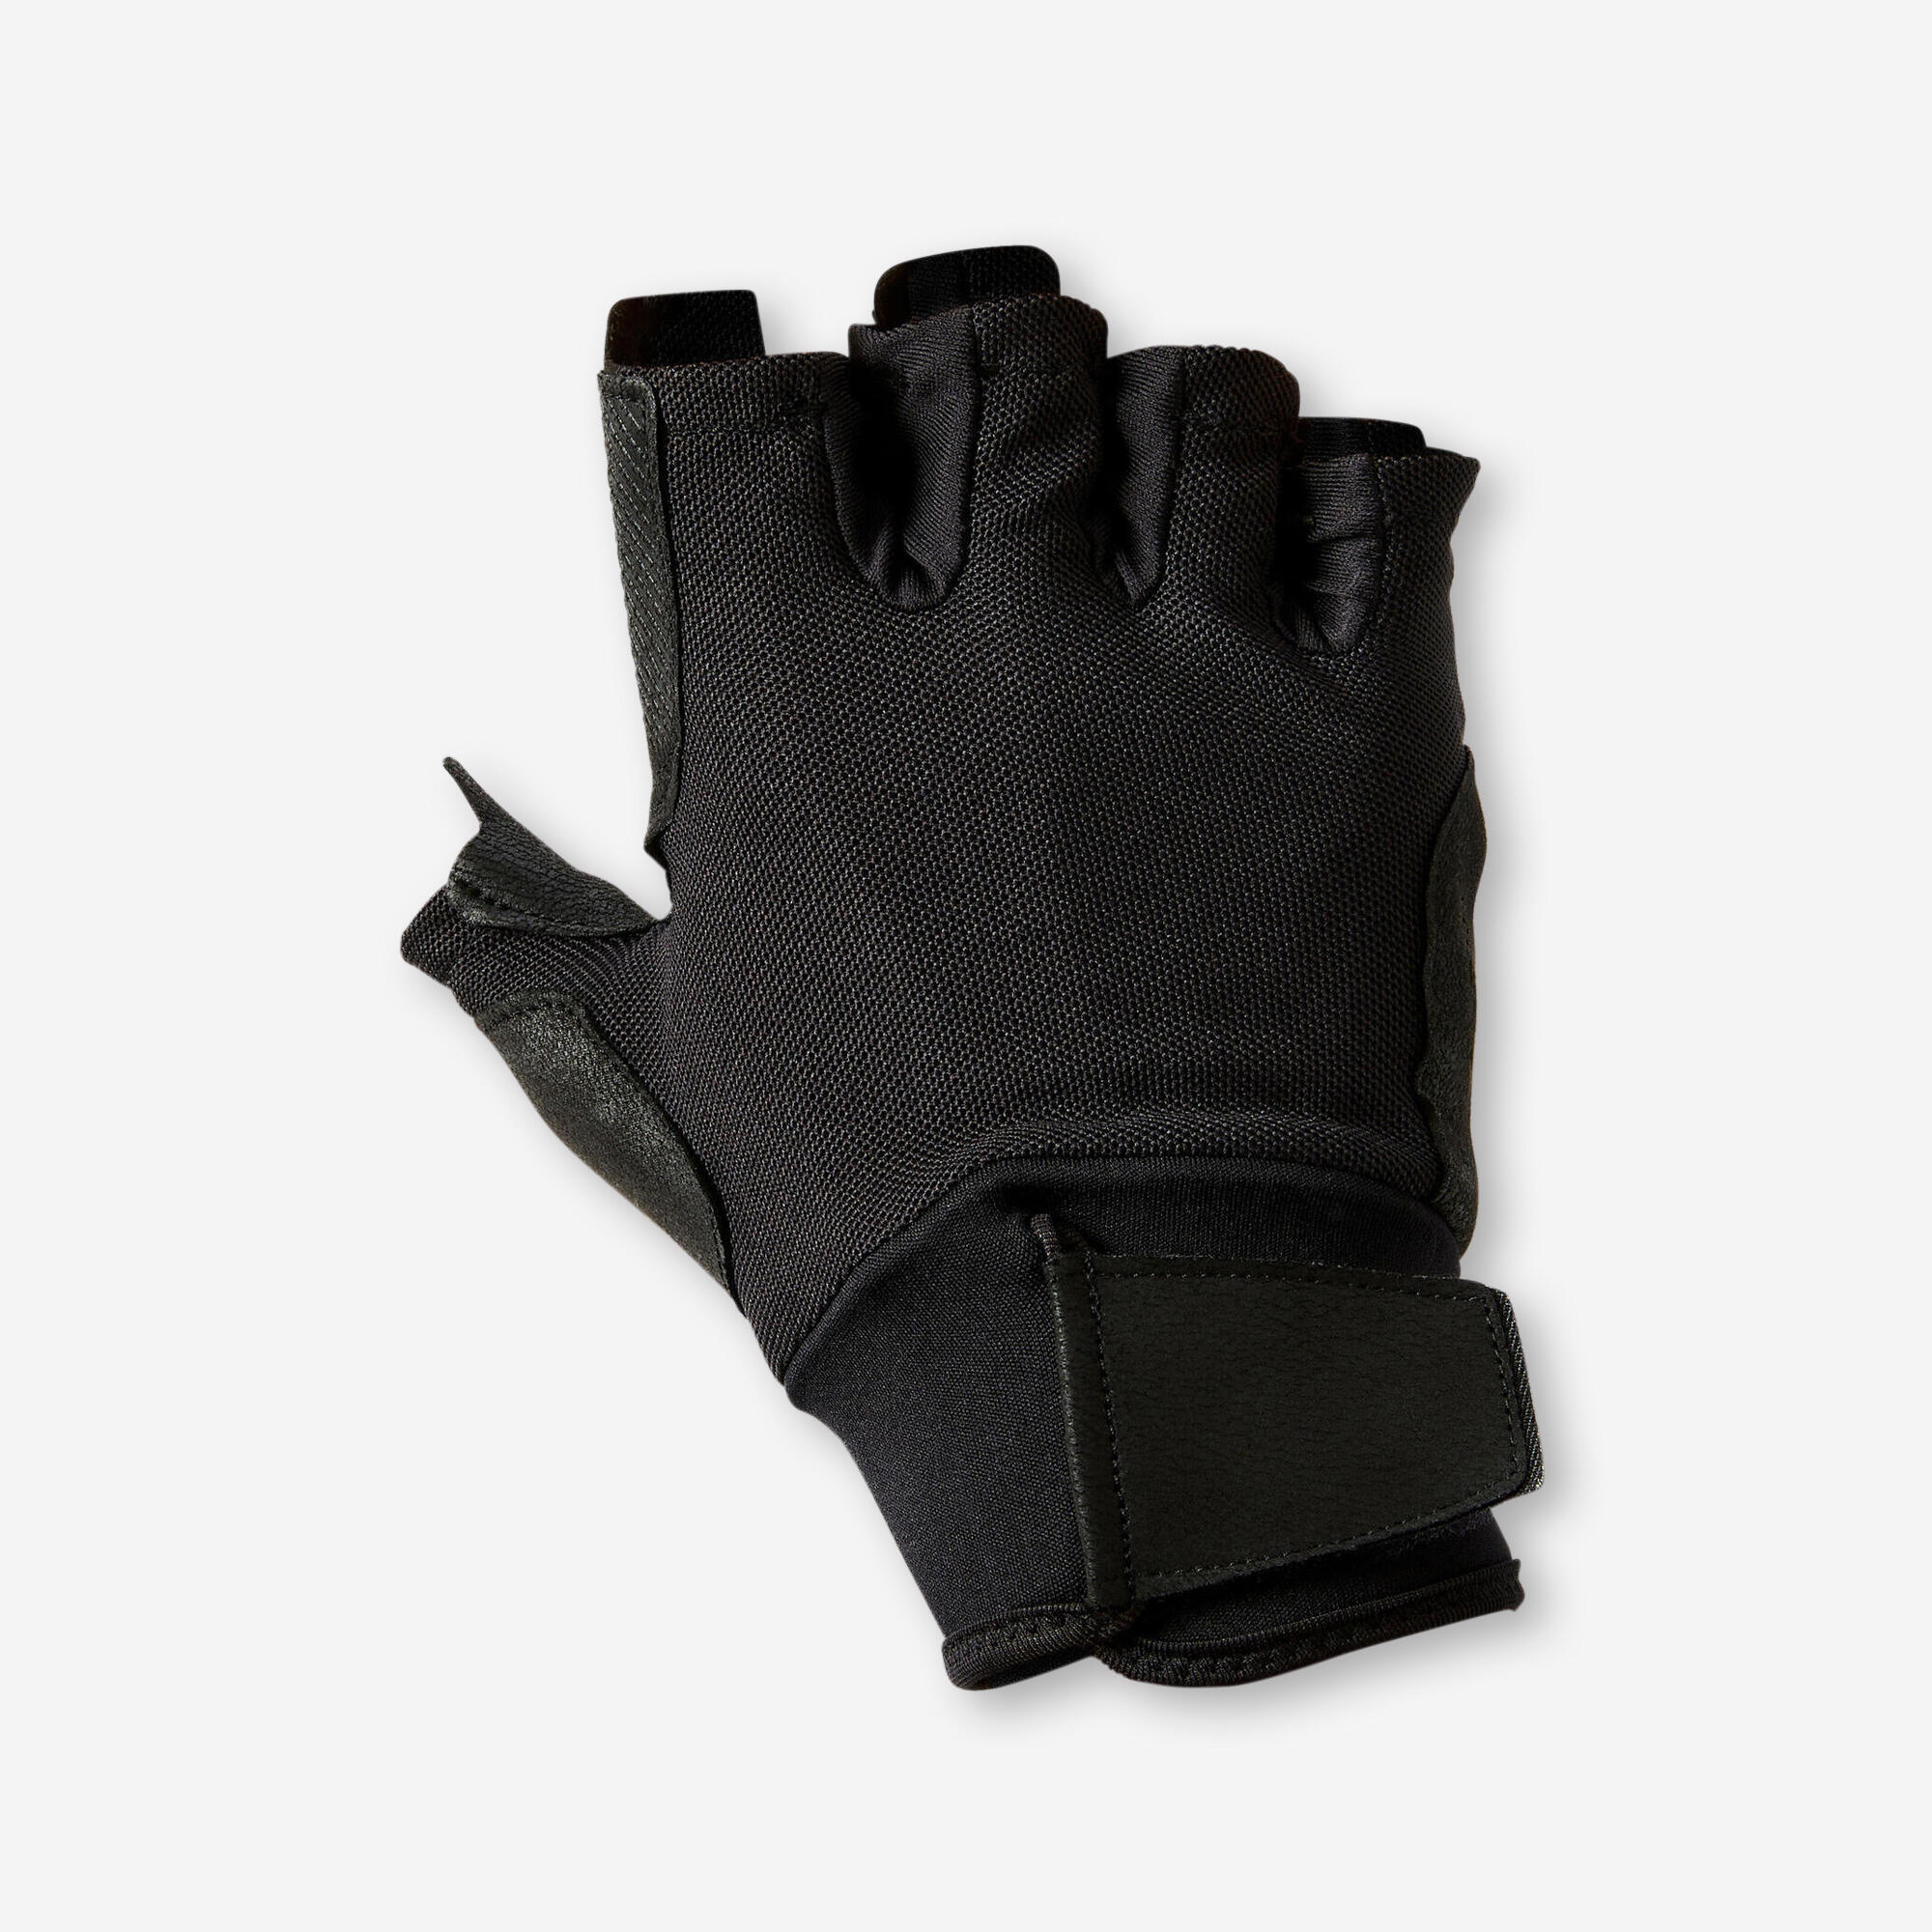 DOMYOS Weight Training Comfort Gloves - Black